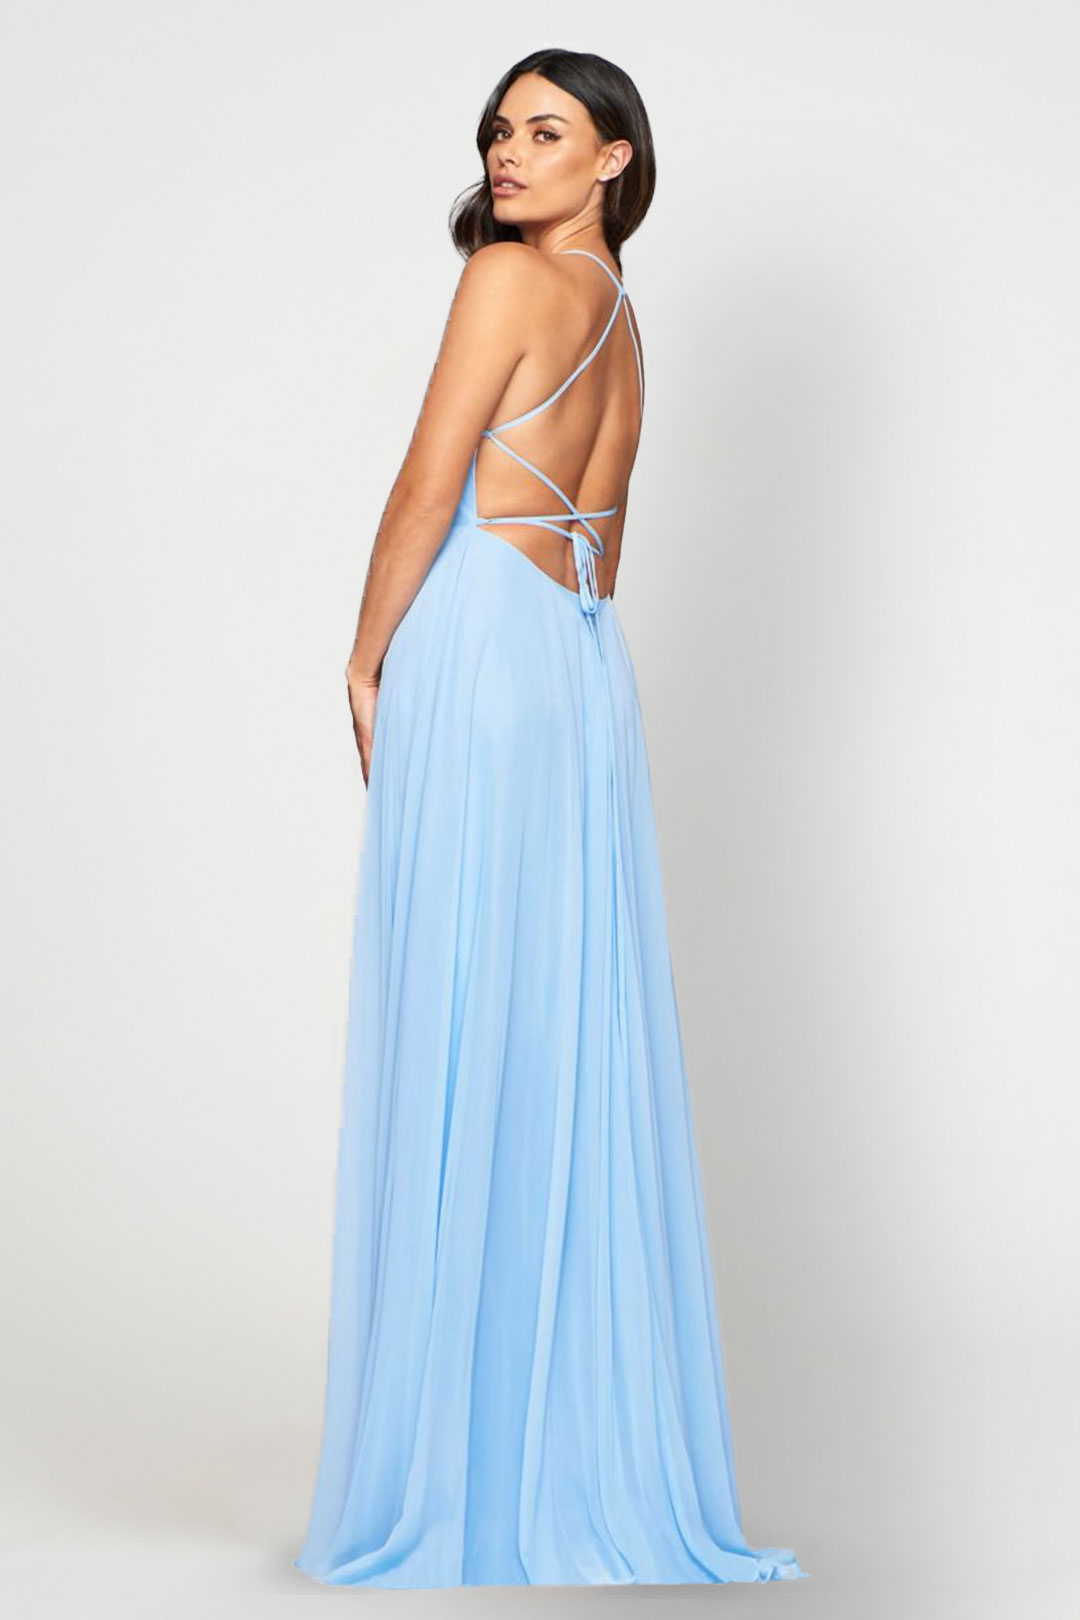 Blue Chiffon Dress - Faviana Dress Rental